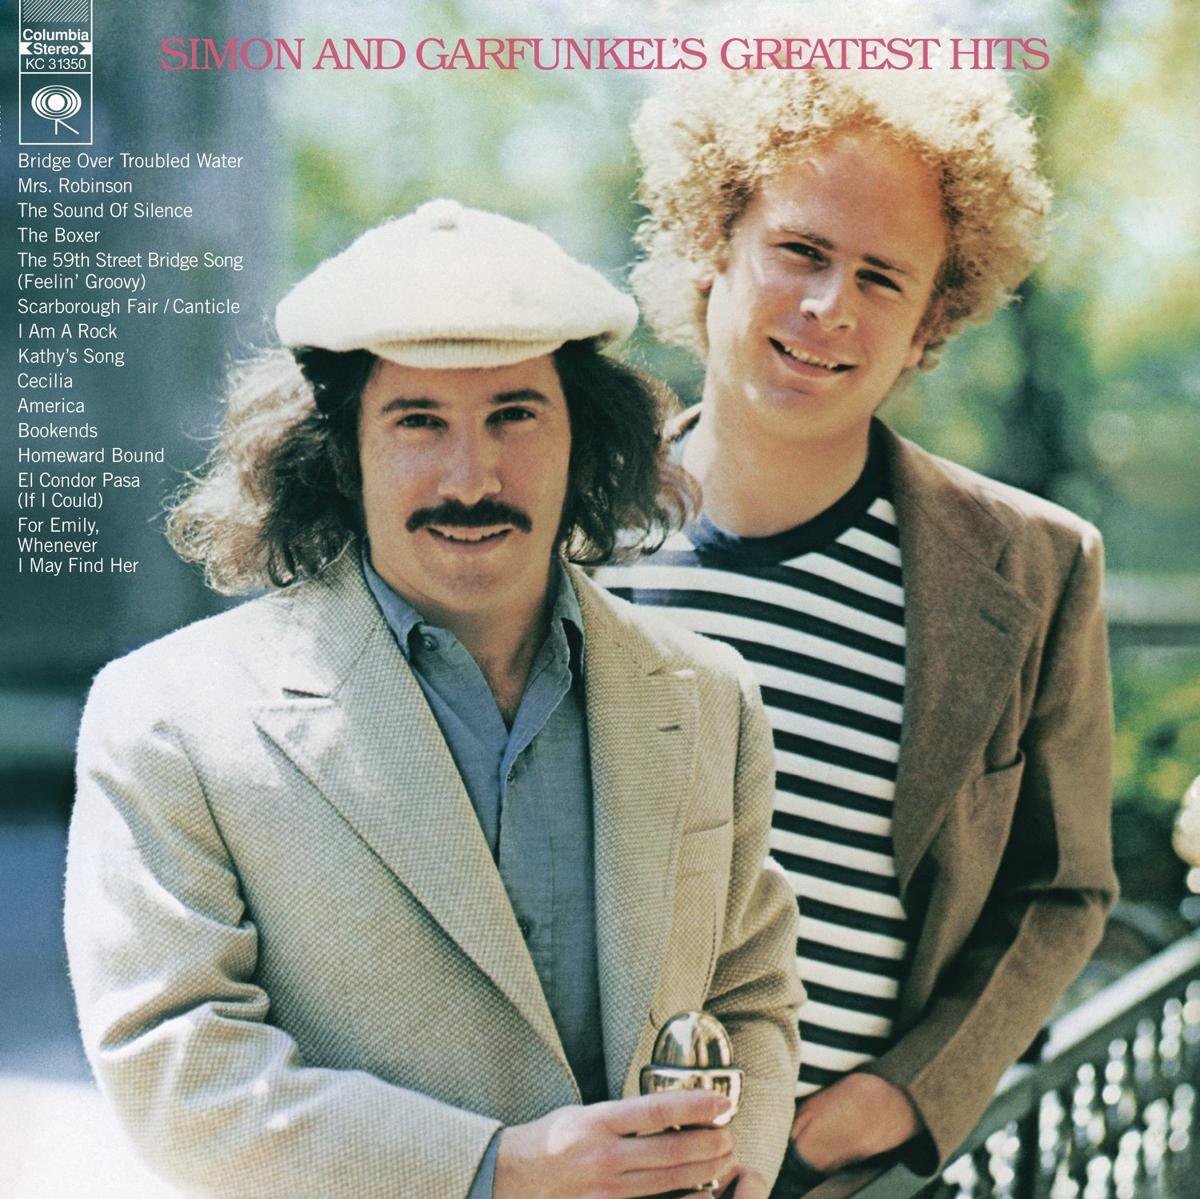 Simon And Garfunkel - Greatest Hits (White vinyl) (LP)